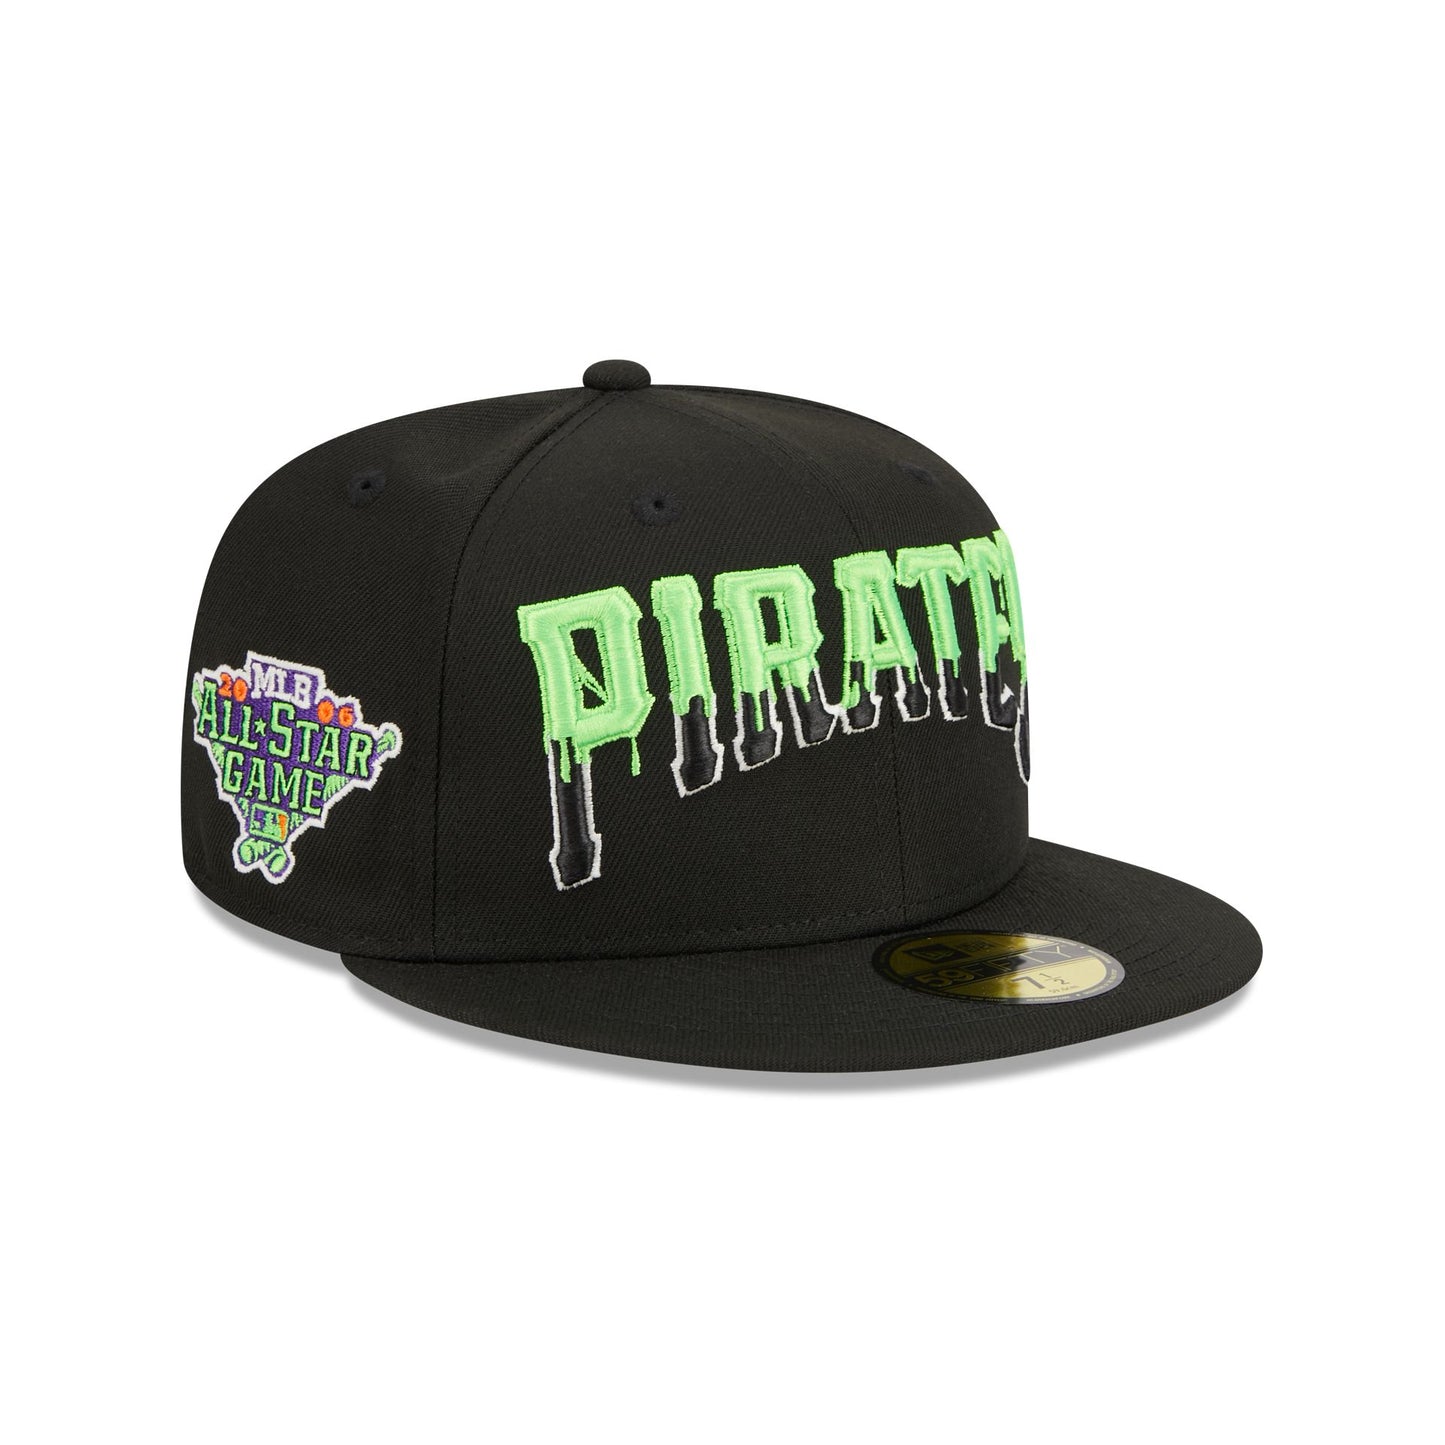 New ERA Pittsburgh Pirates Mlb Team Classic 39Thirty Stretch-Fitted Cap Black